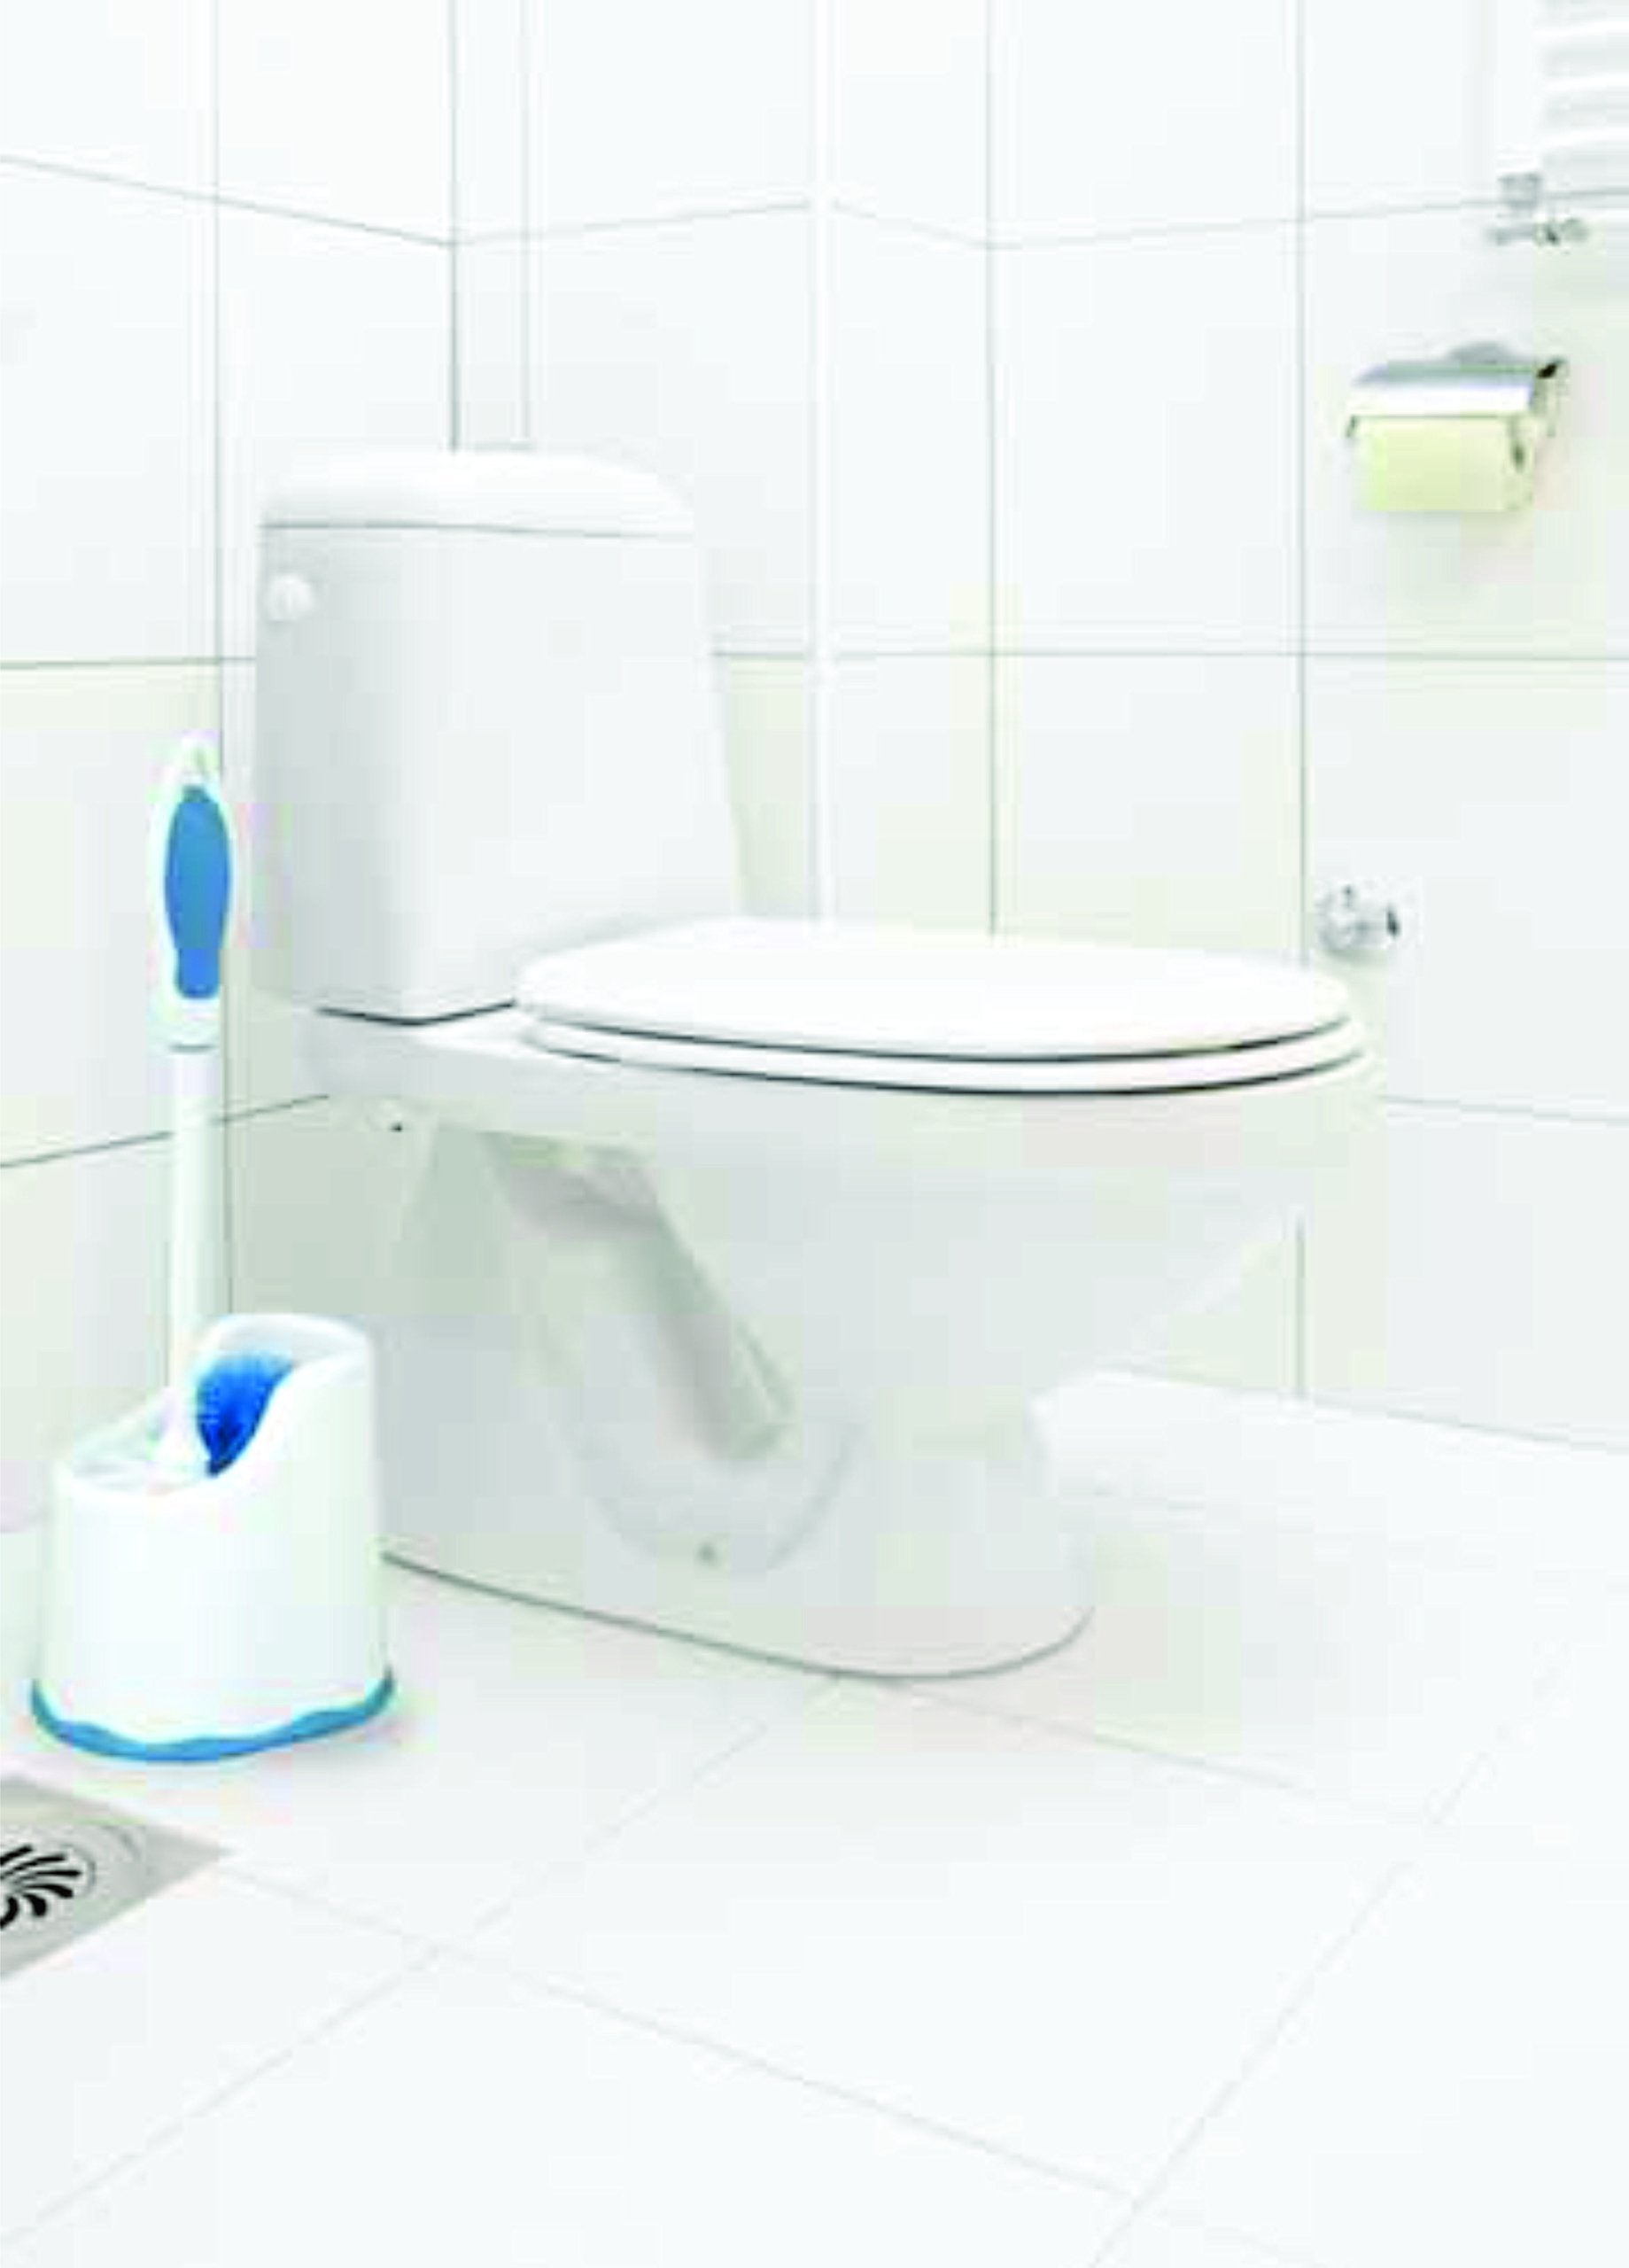 Modern Toilet Cleaning Brush Set - ApolloBox